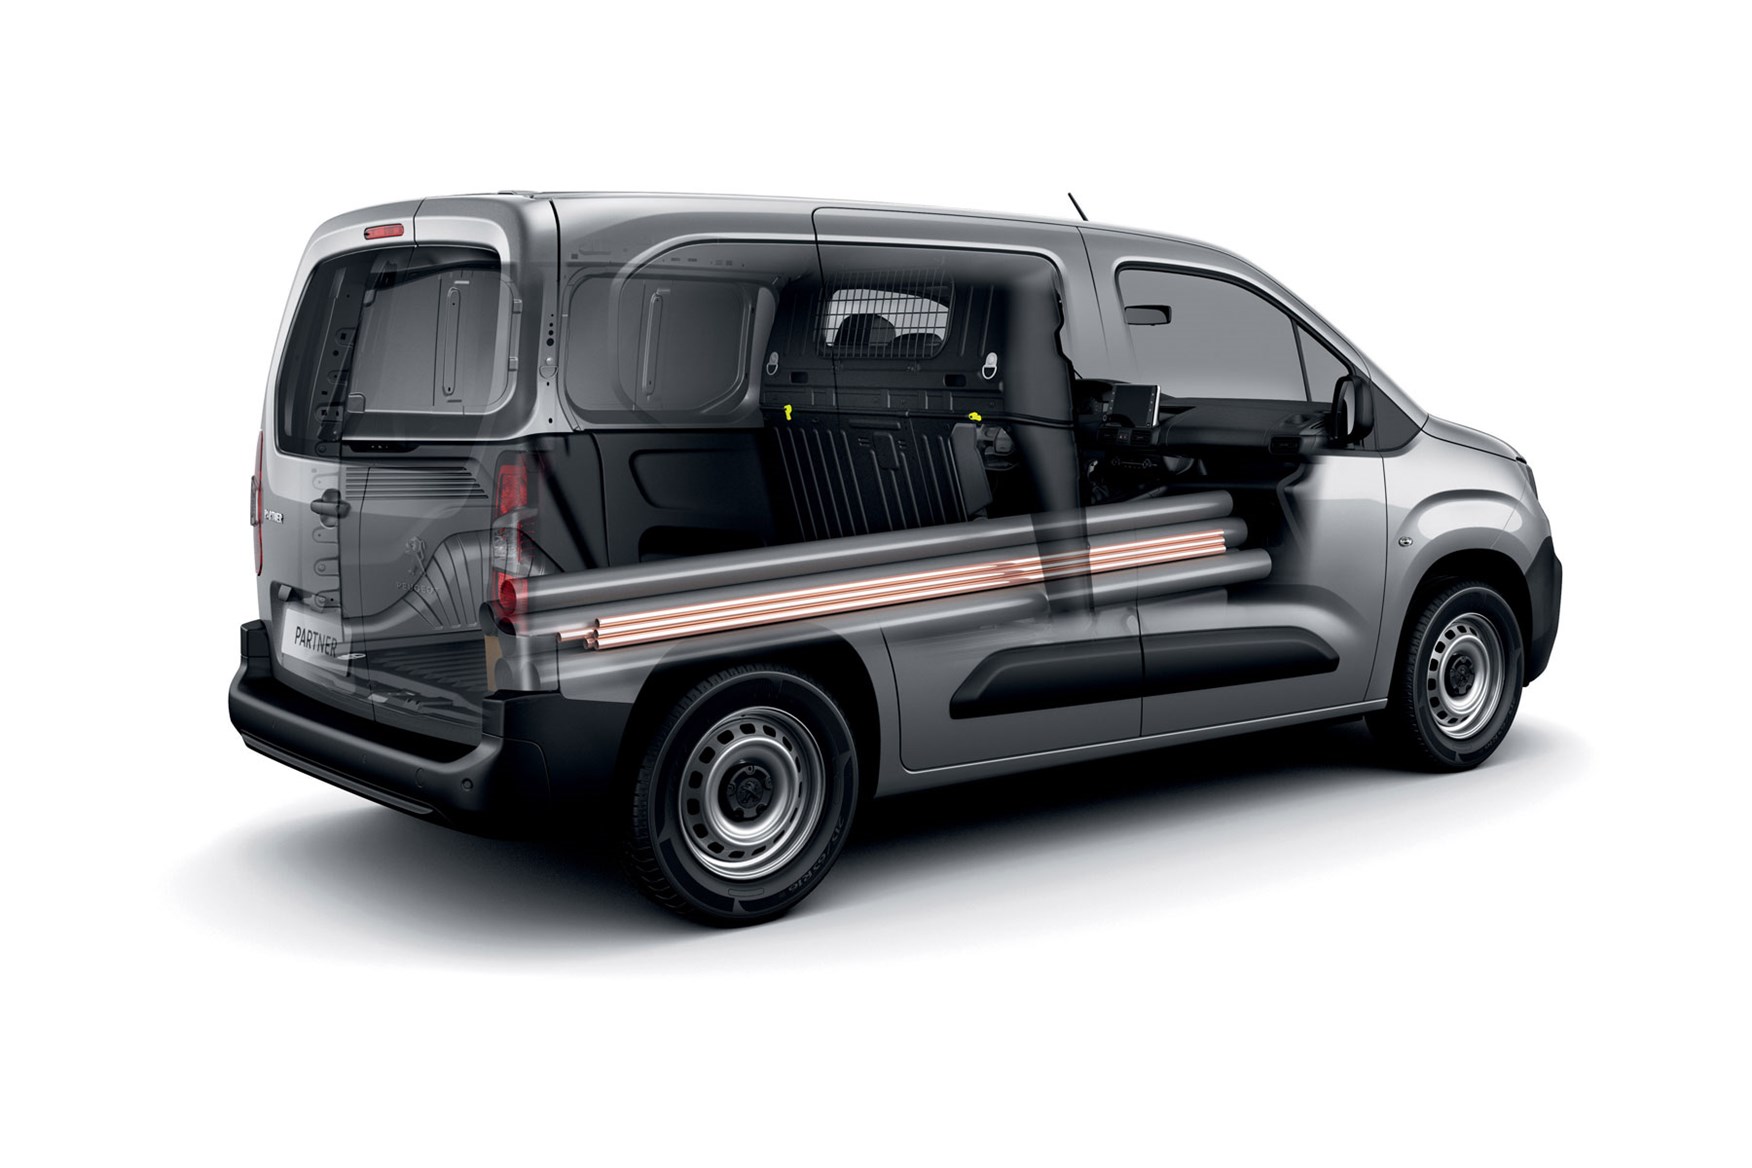 Peugeot Partner 2018 – new small van 